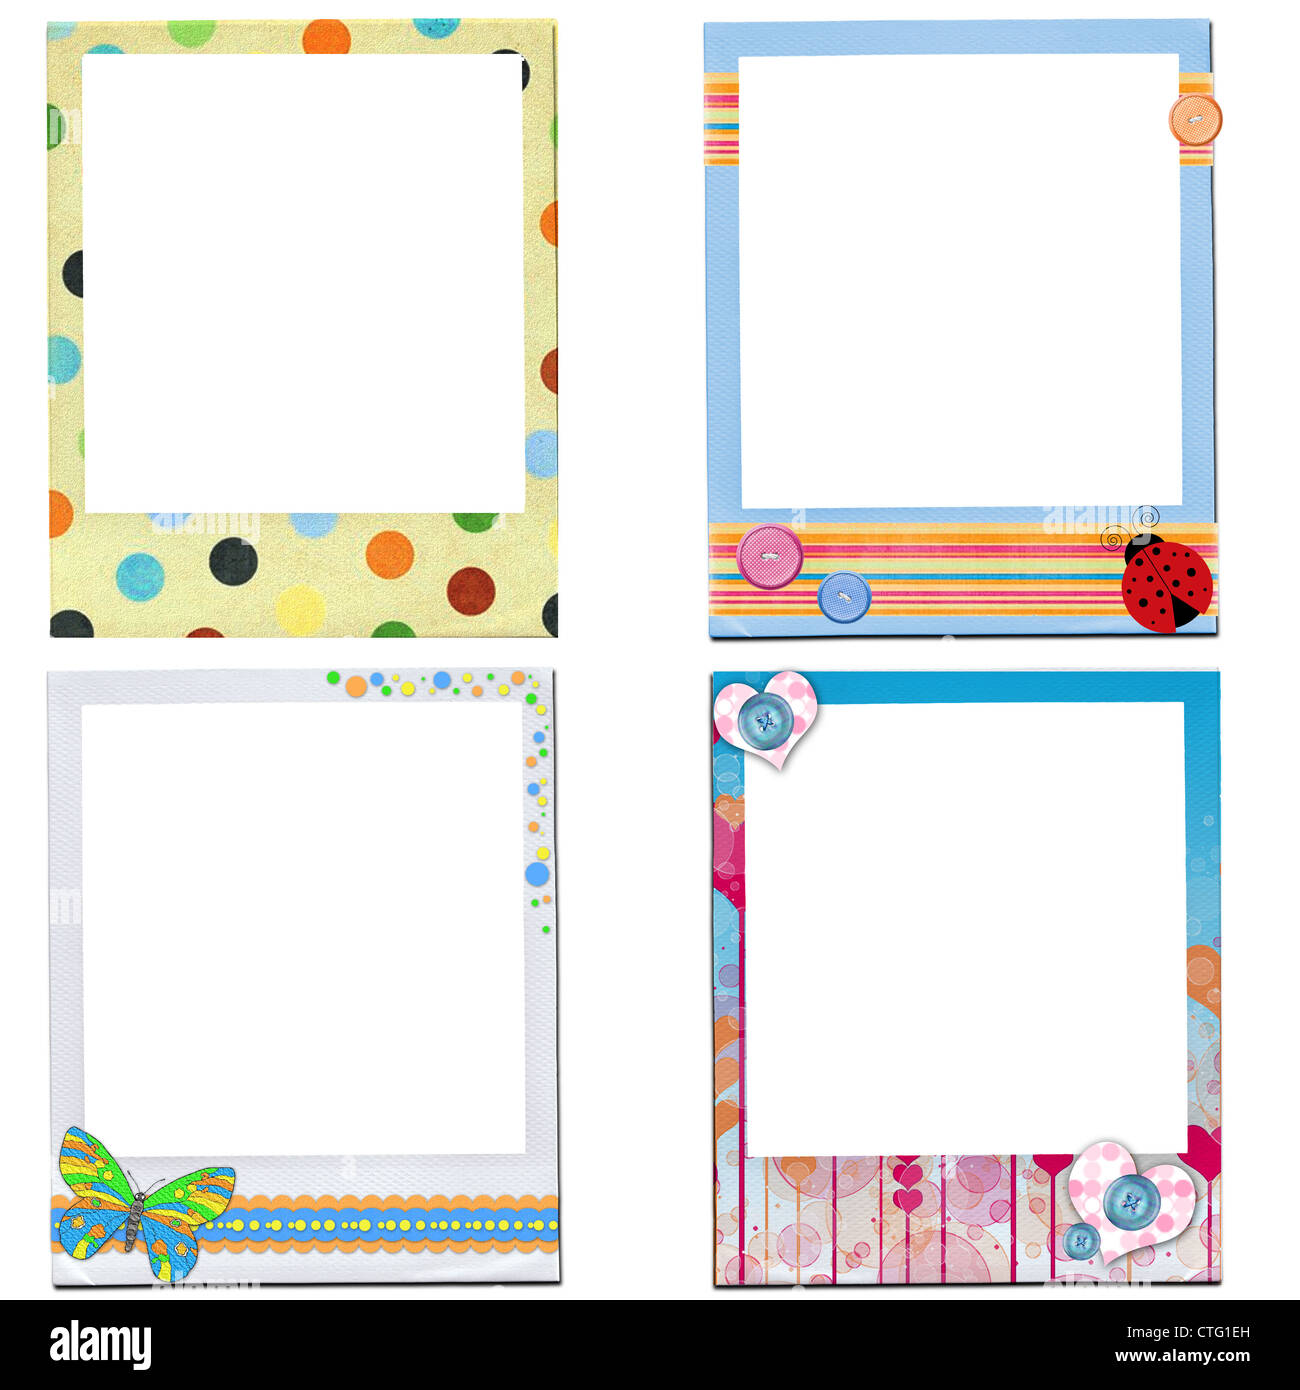 design of kids photo frame Stock Photo - Alamy